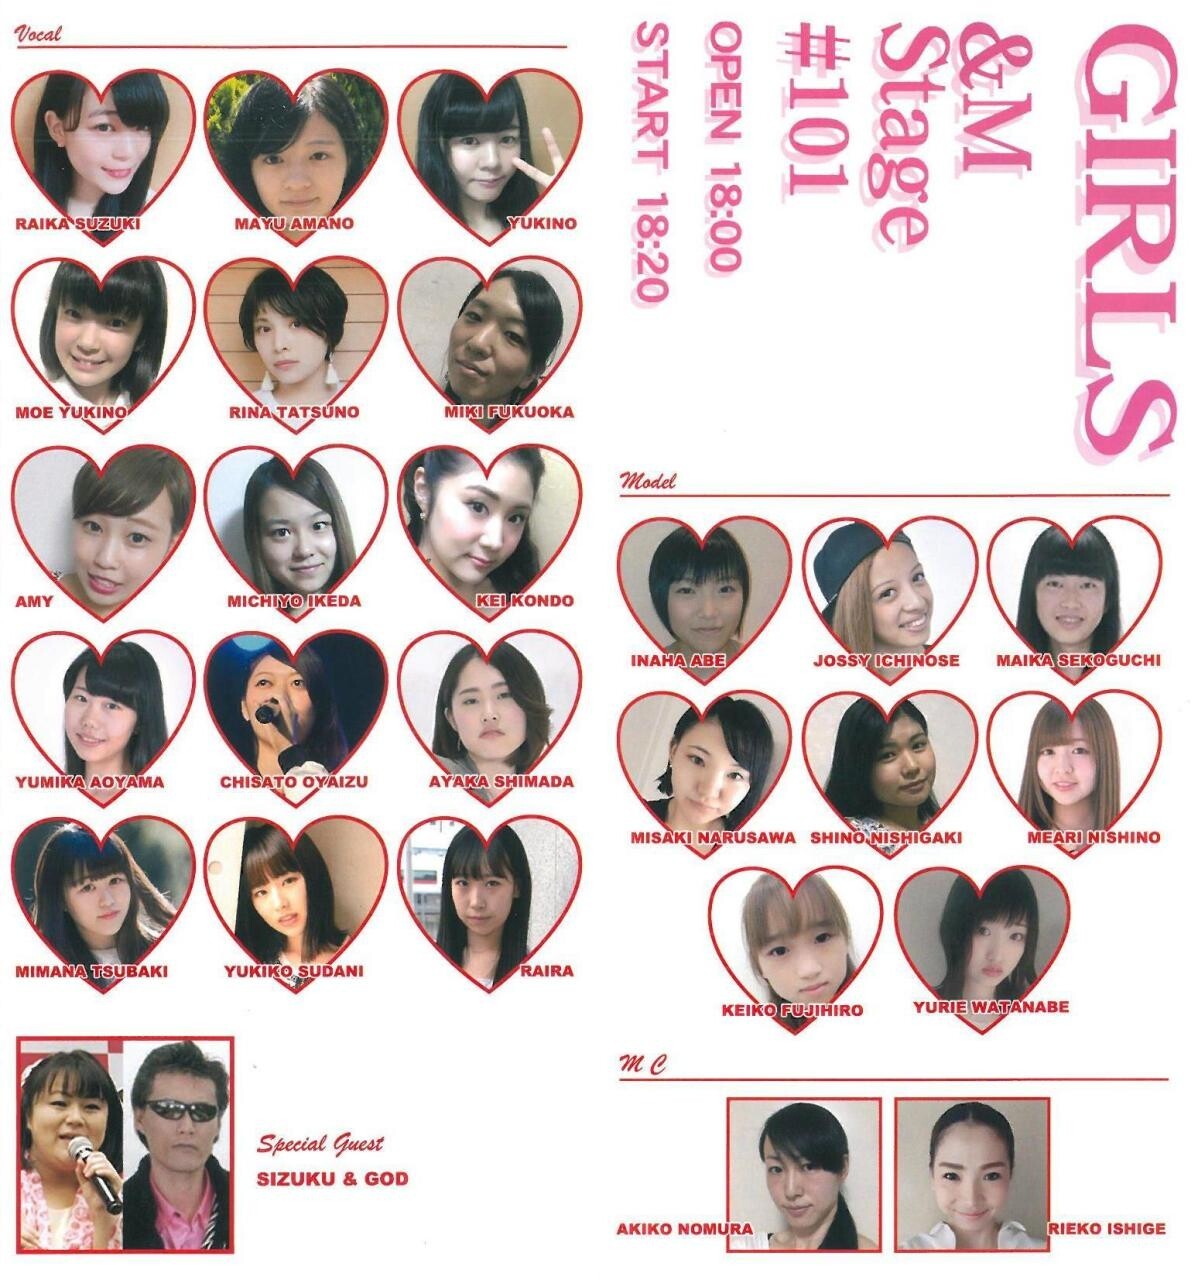 Iflyer Mstage 101 For Men For Girl At Glad Tokyo